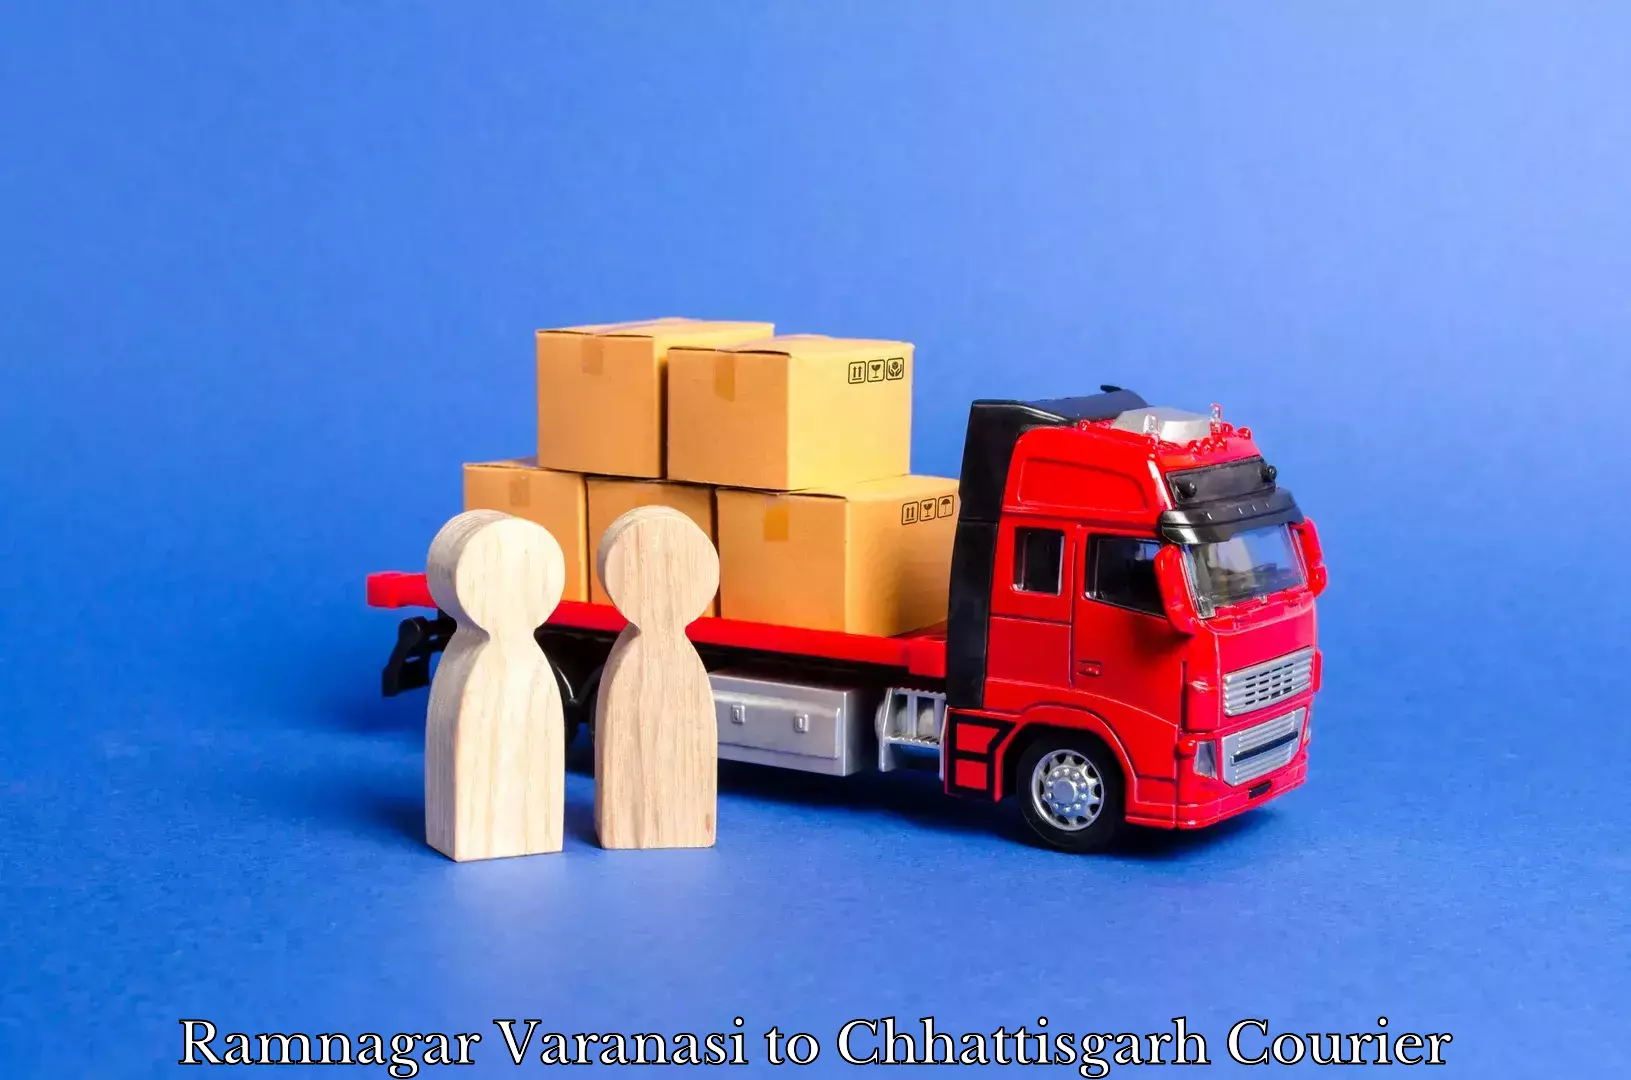 Small business couriers Ramnagar Varanasi to Chhattisgarh